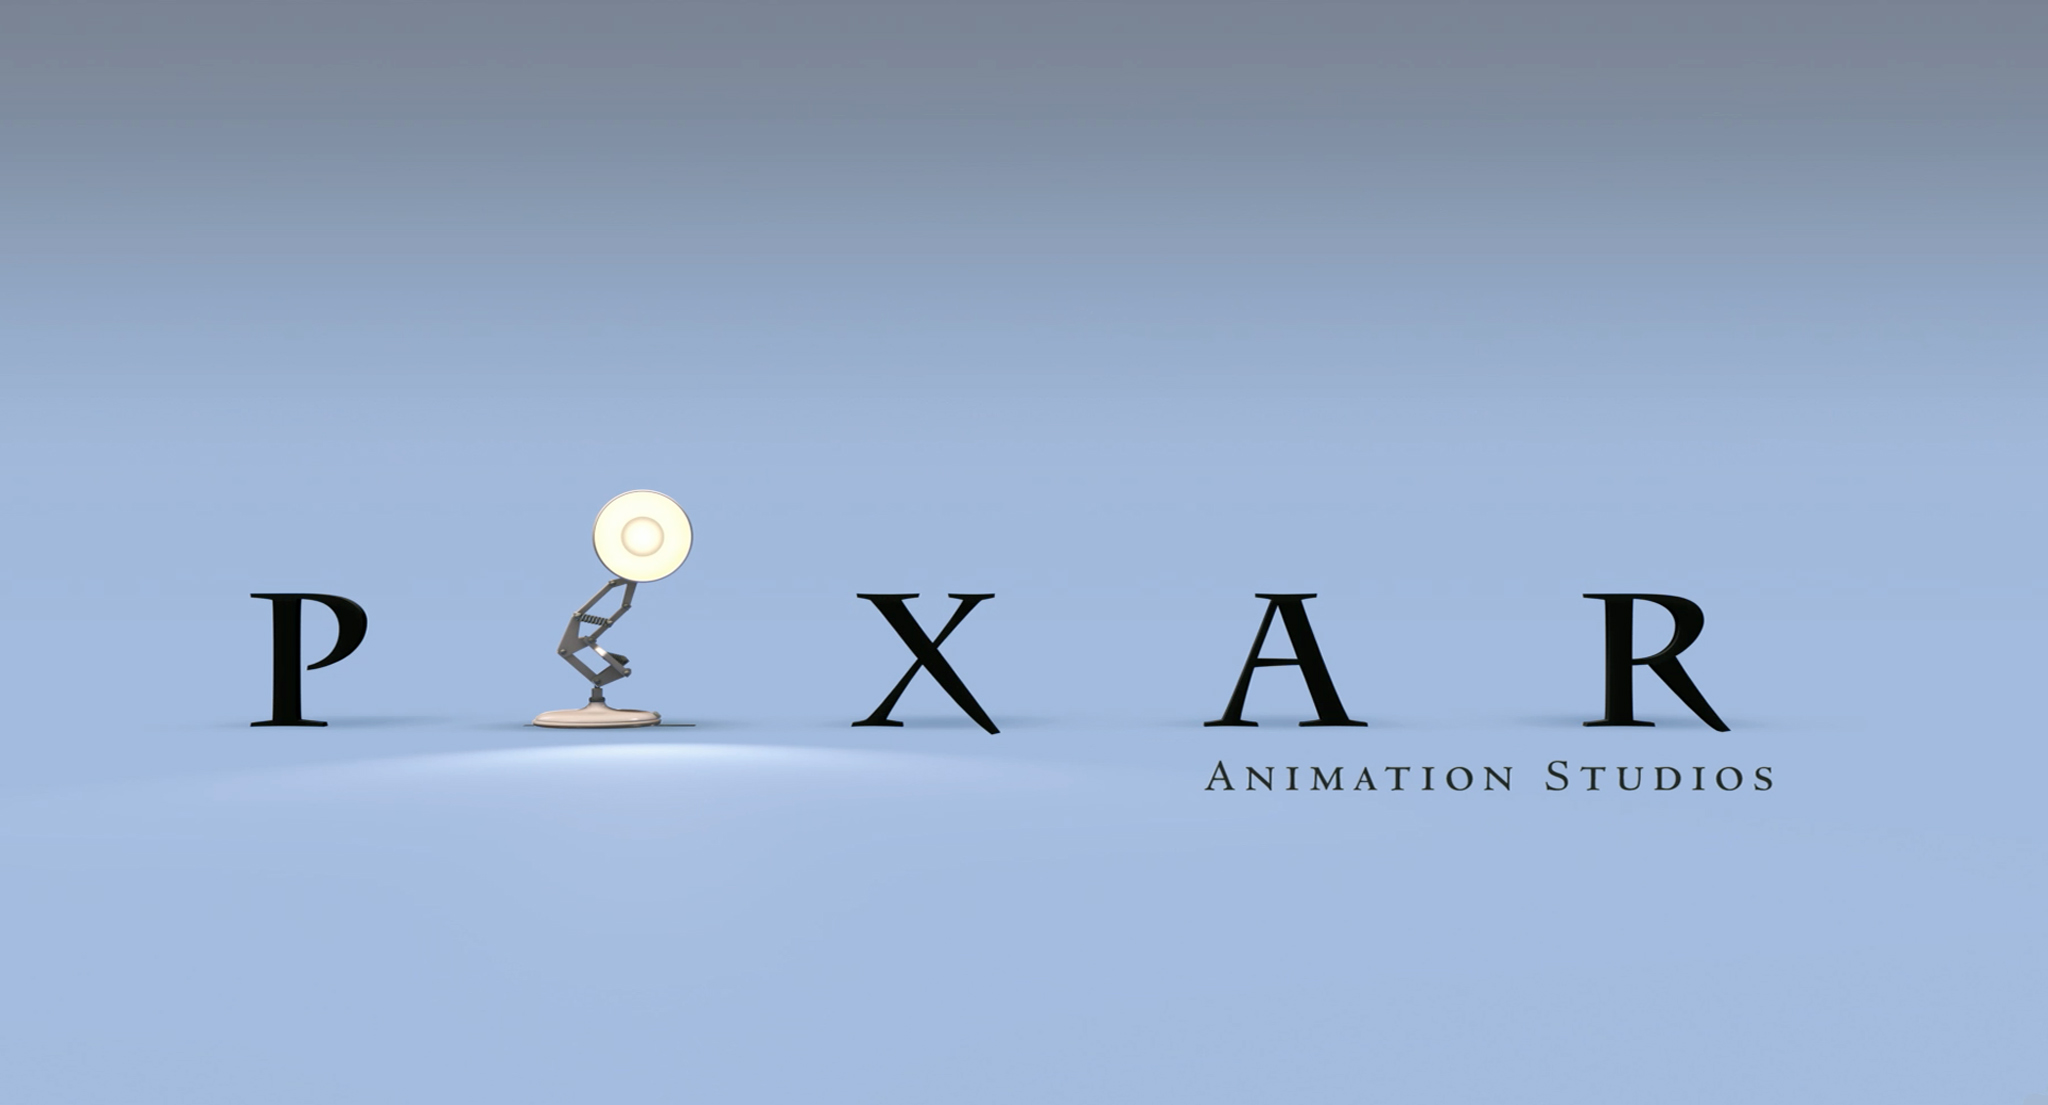 Amazing Pixar Pictures & Backgrounds